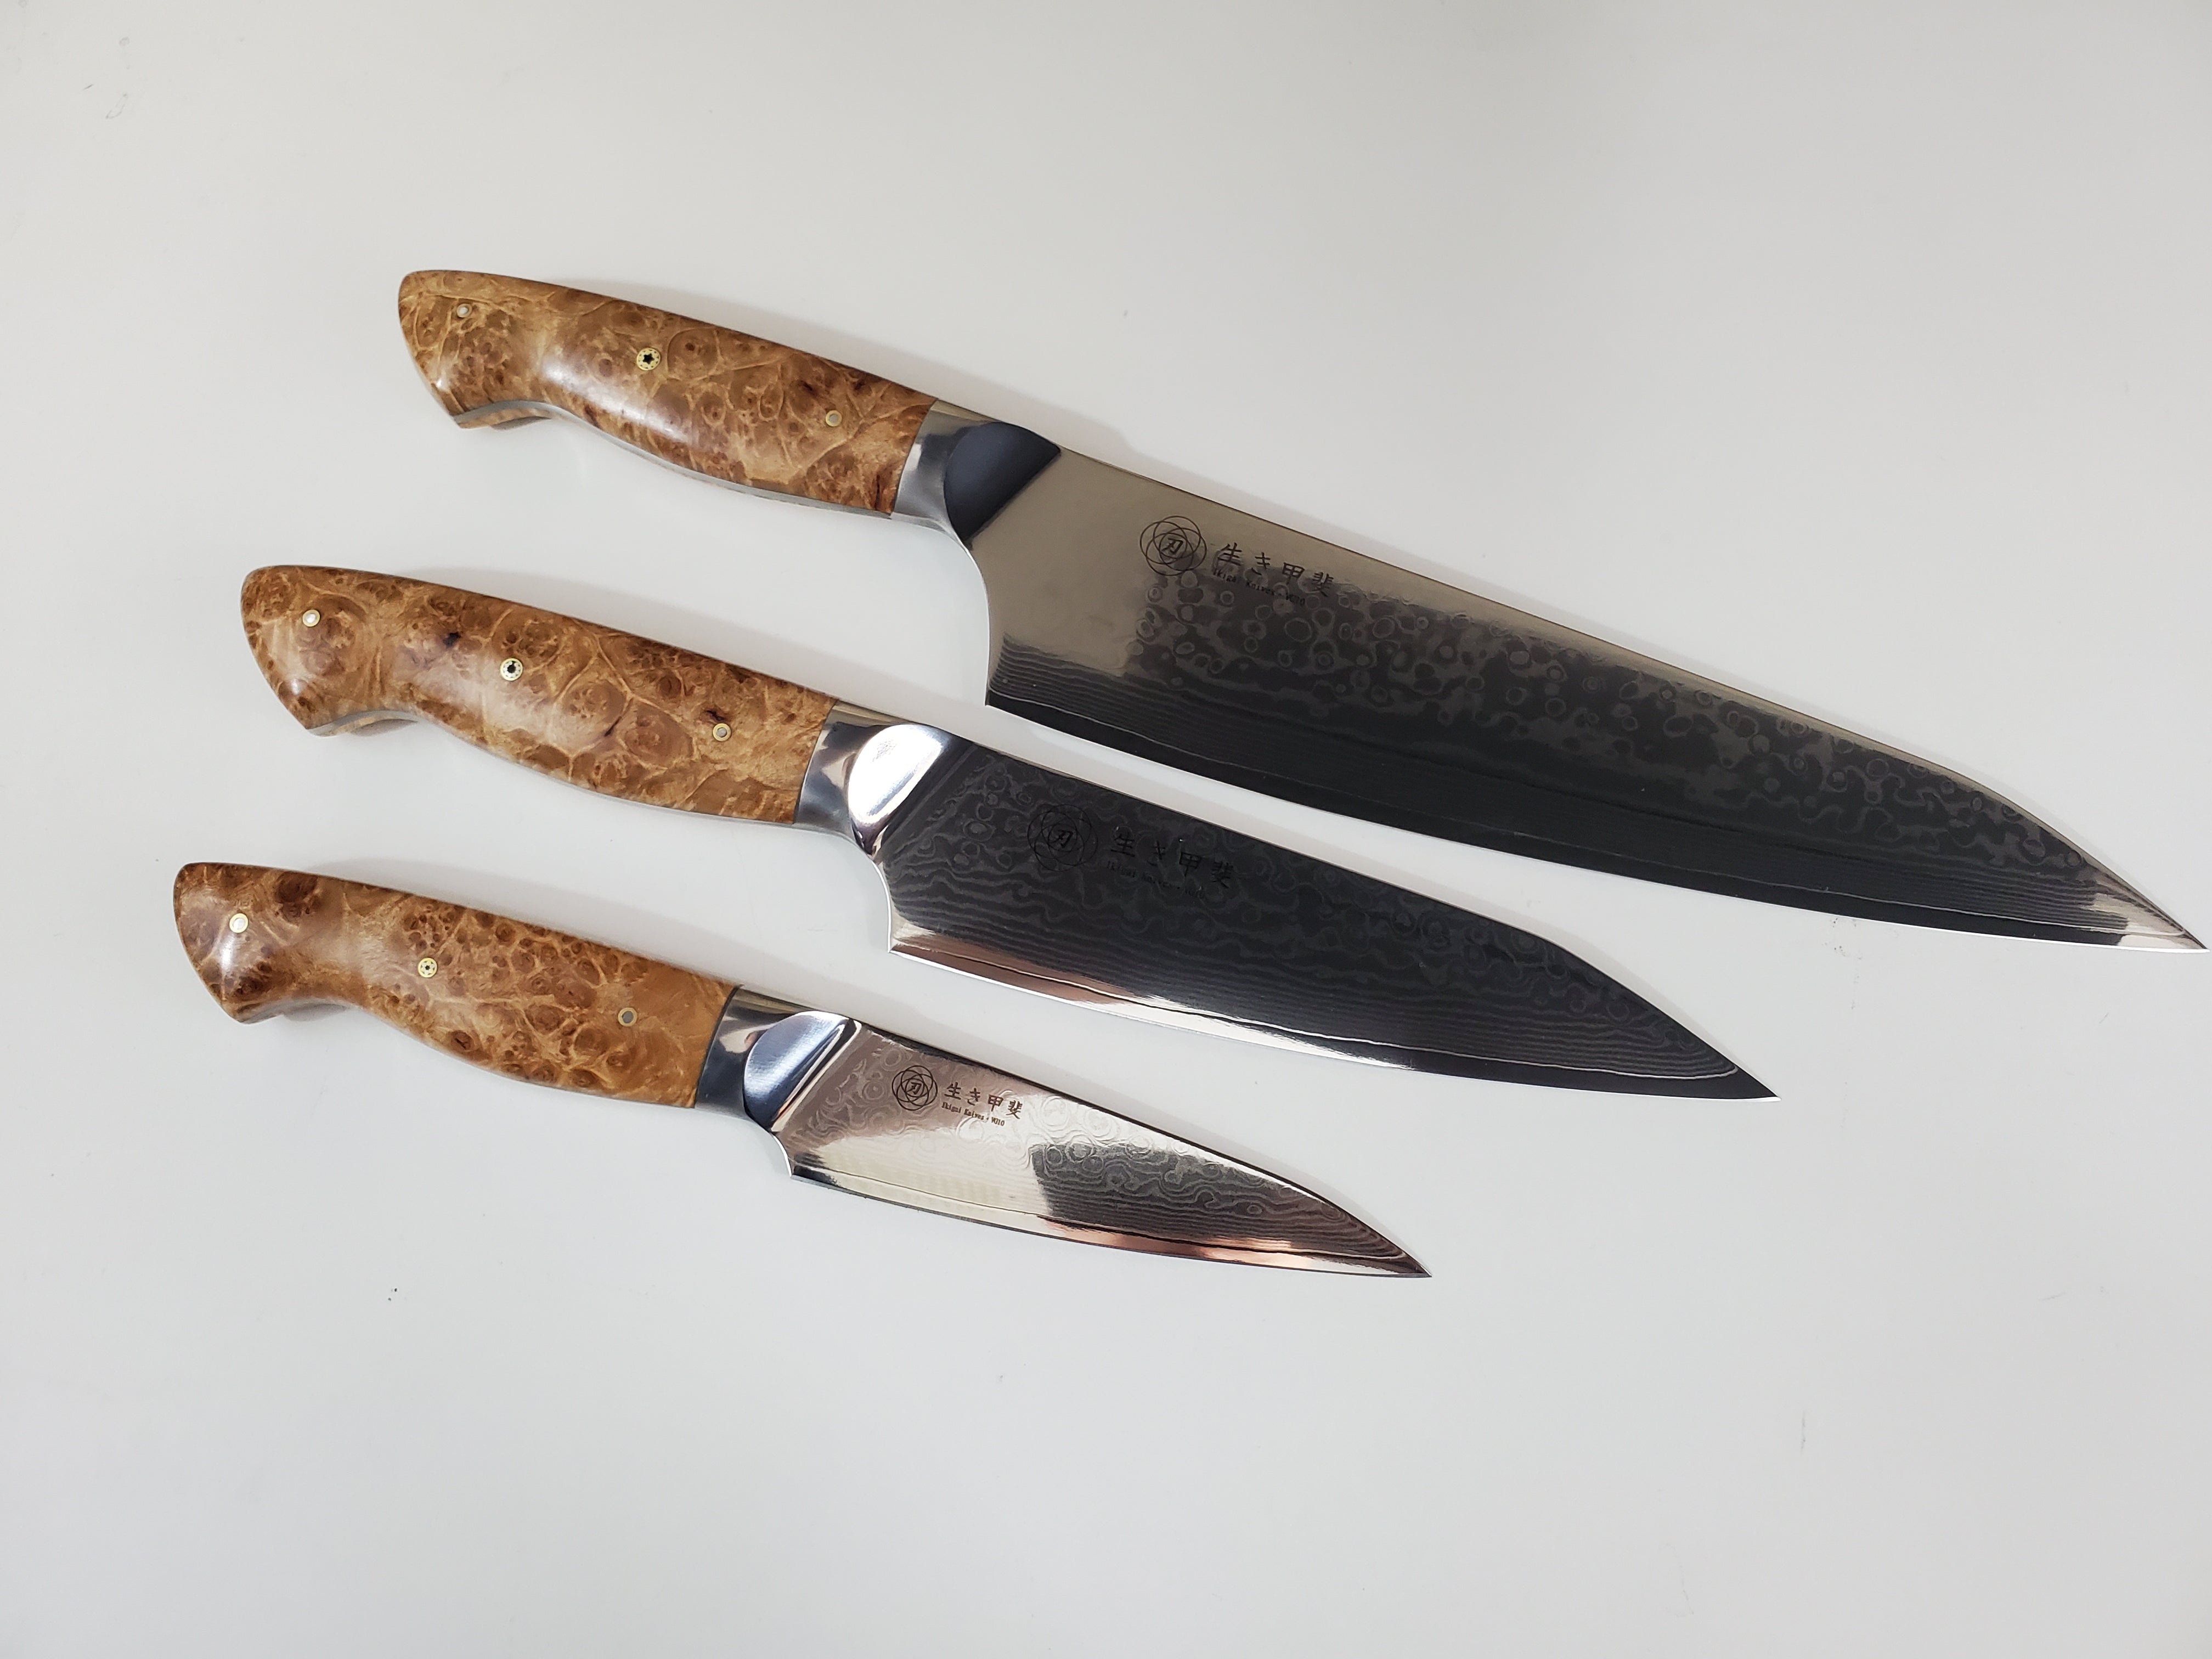 VG10 Damascus Chef knife set - 3pc  (paring)